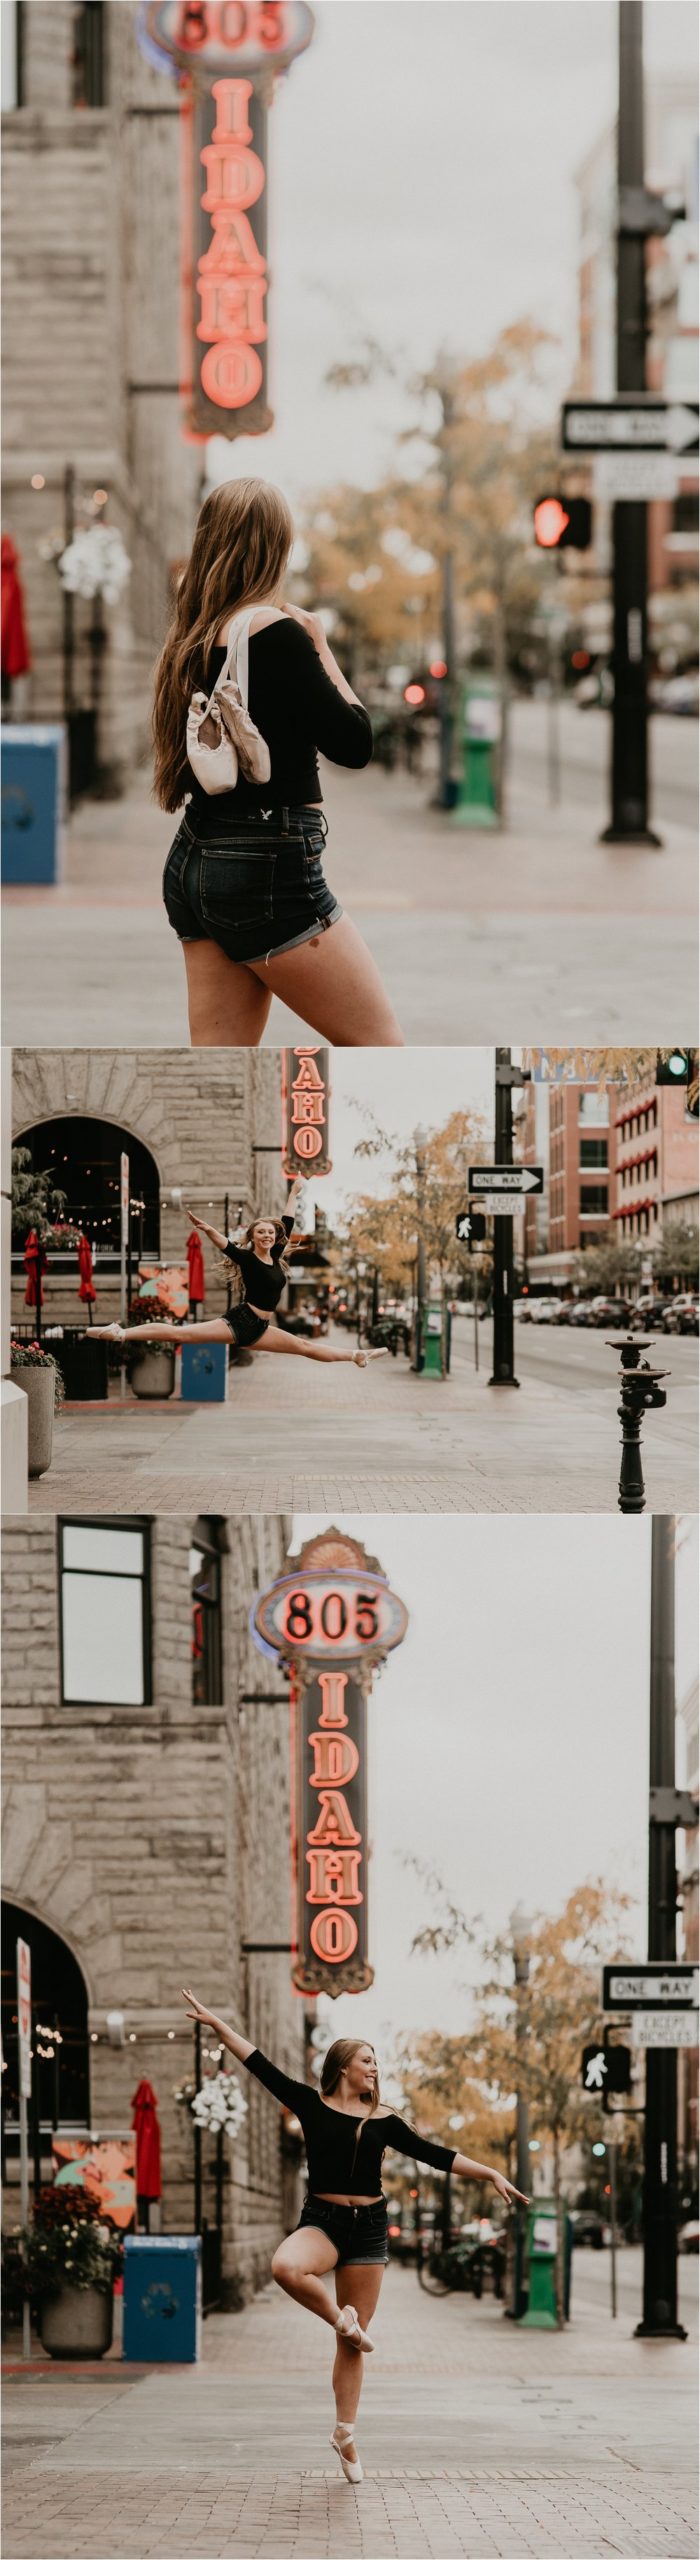 Boise Senior Photographer Makayla Madden Photography Senior Girl Capital High School Kailee Roberts Urban Dancing Senior Pictures Ballet Point Dance Senior Photos  Downtown Boise Idaho St Sign